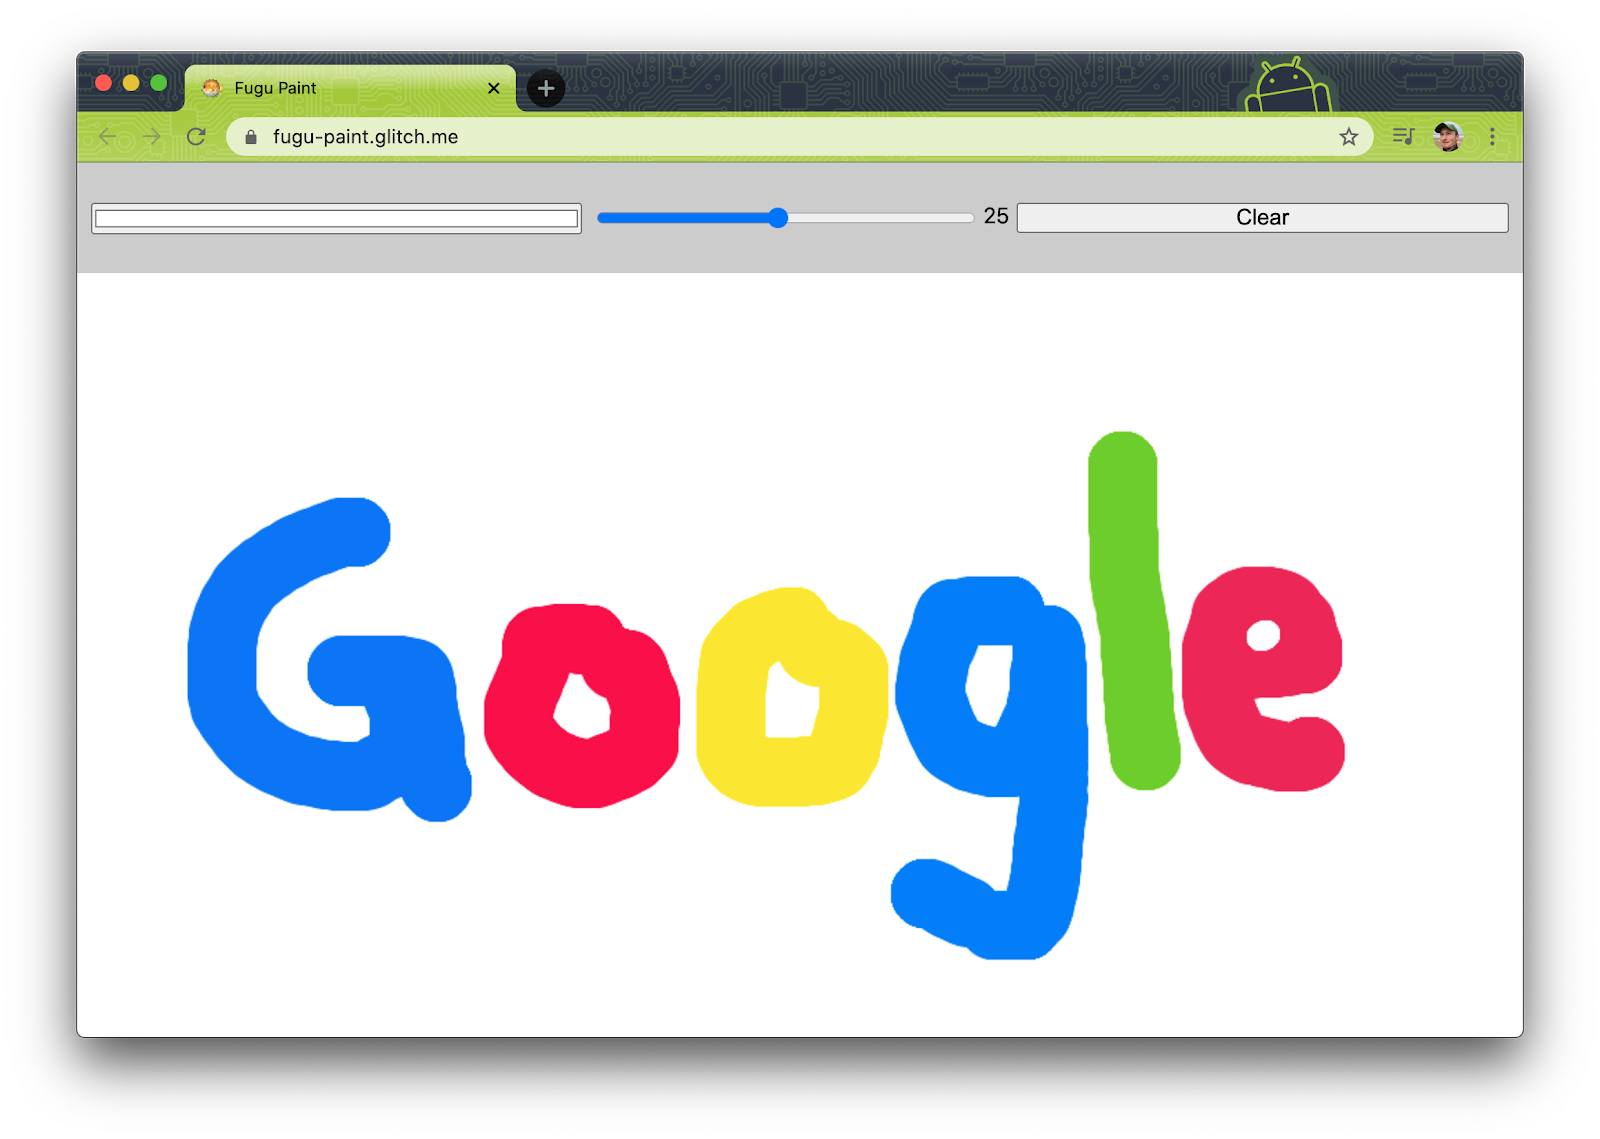 Fugu Greetings خط پایه PWA با یک بوم بزرگ با کلمه &ldquo;Google&rdquo; روی آن نقاشی شده است.